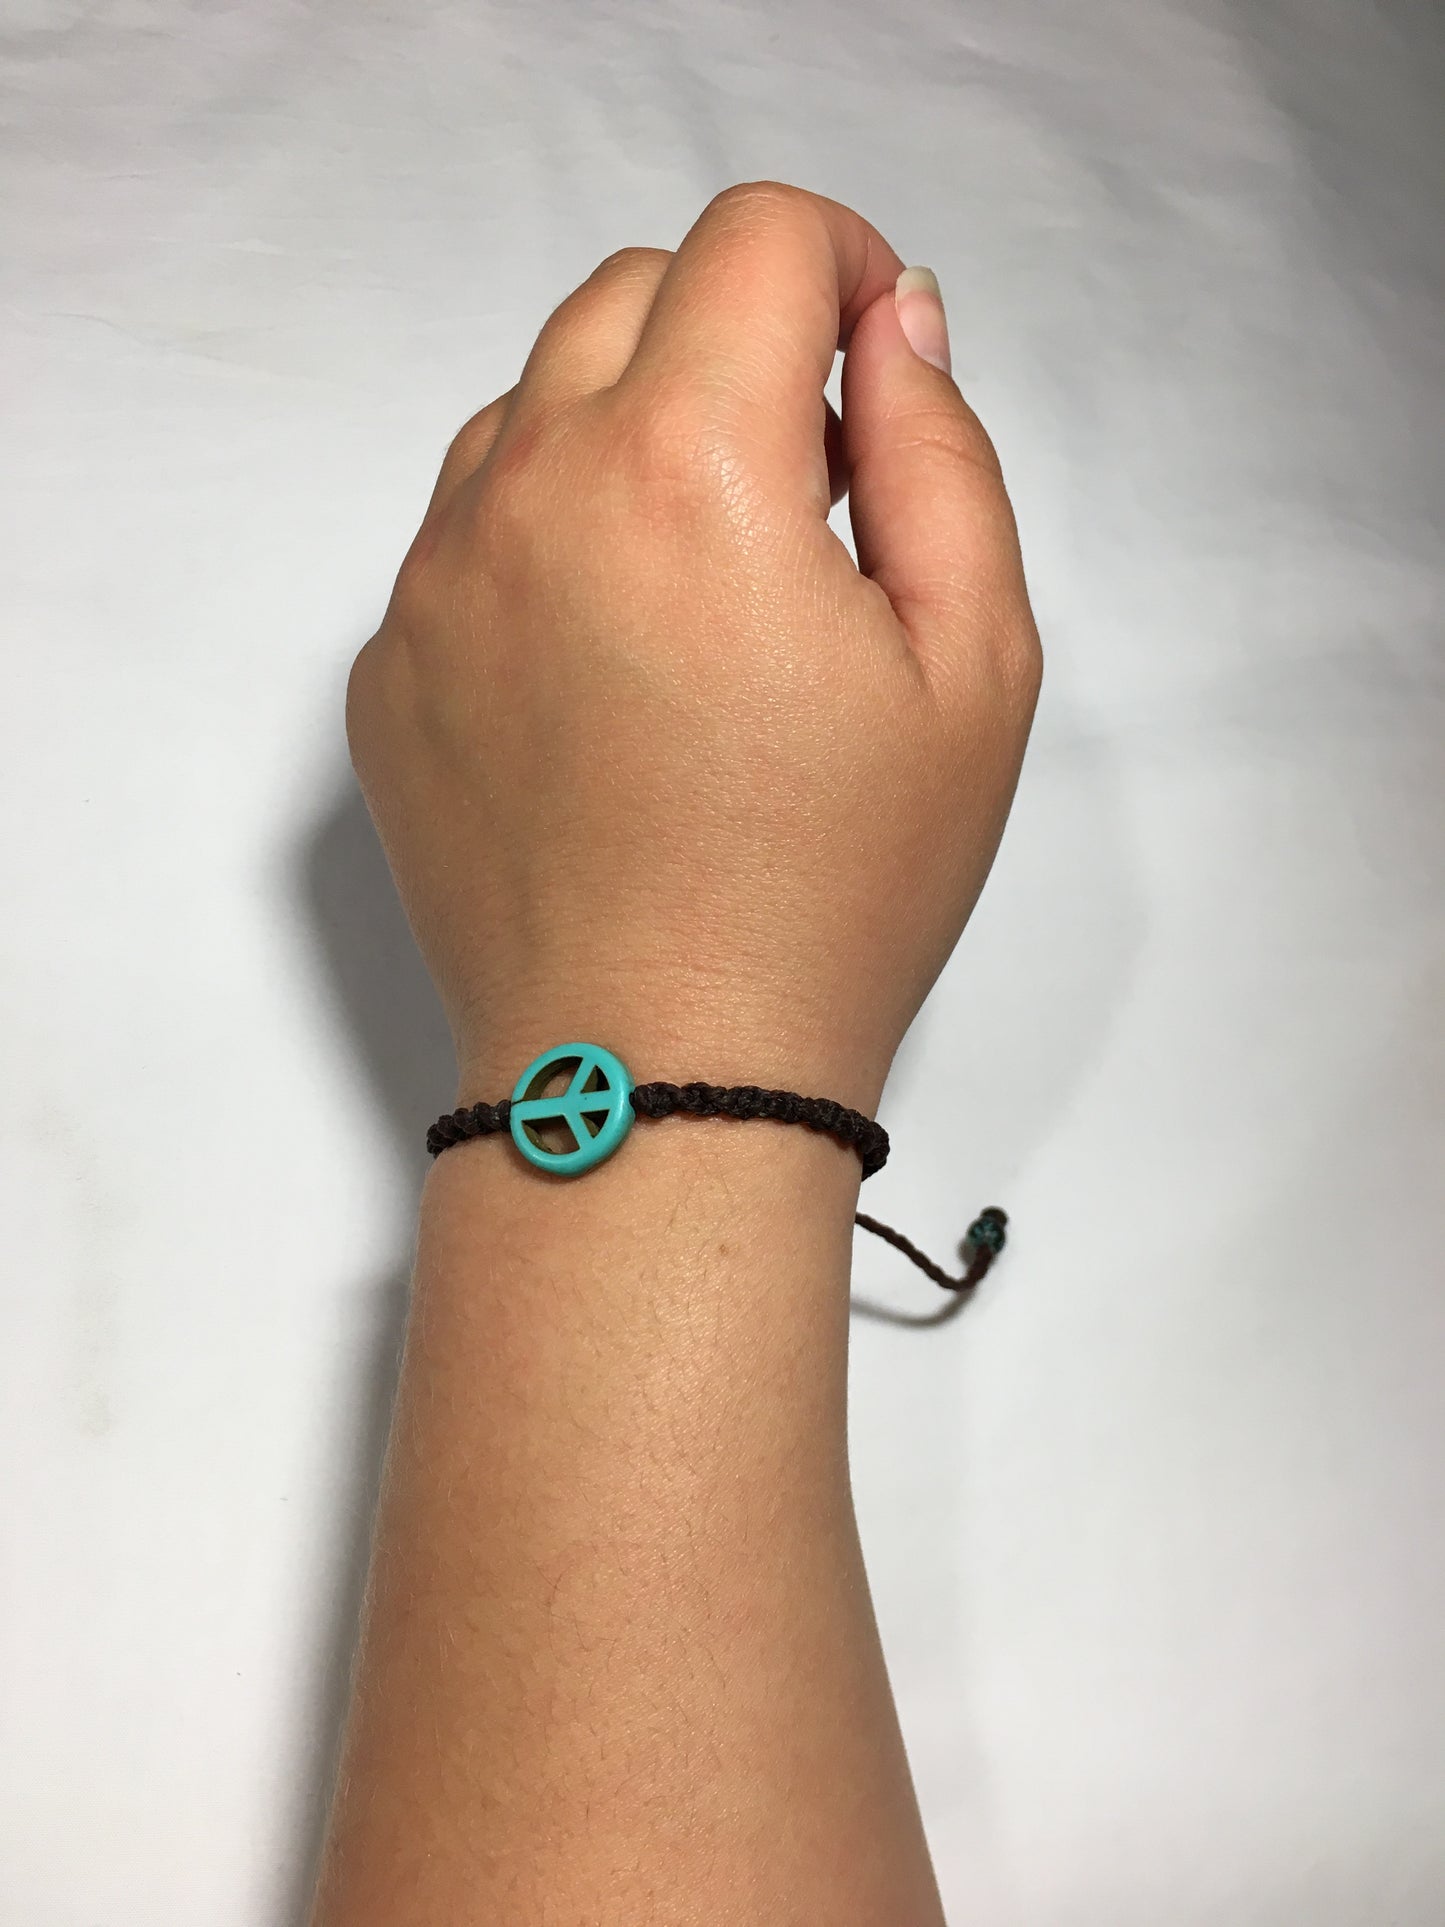 Roped Bracelet - Peace Sign pendant, wax cord bracelet